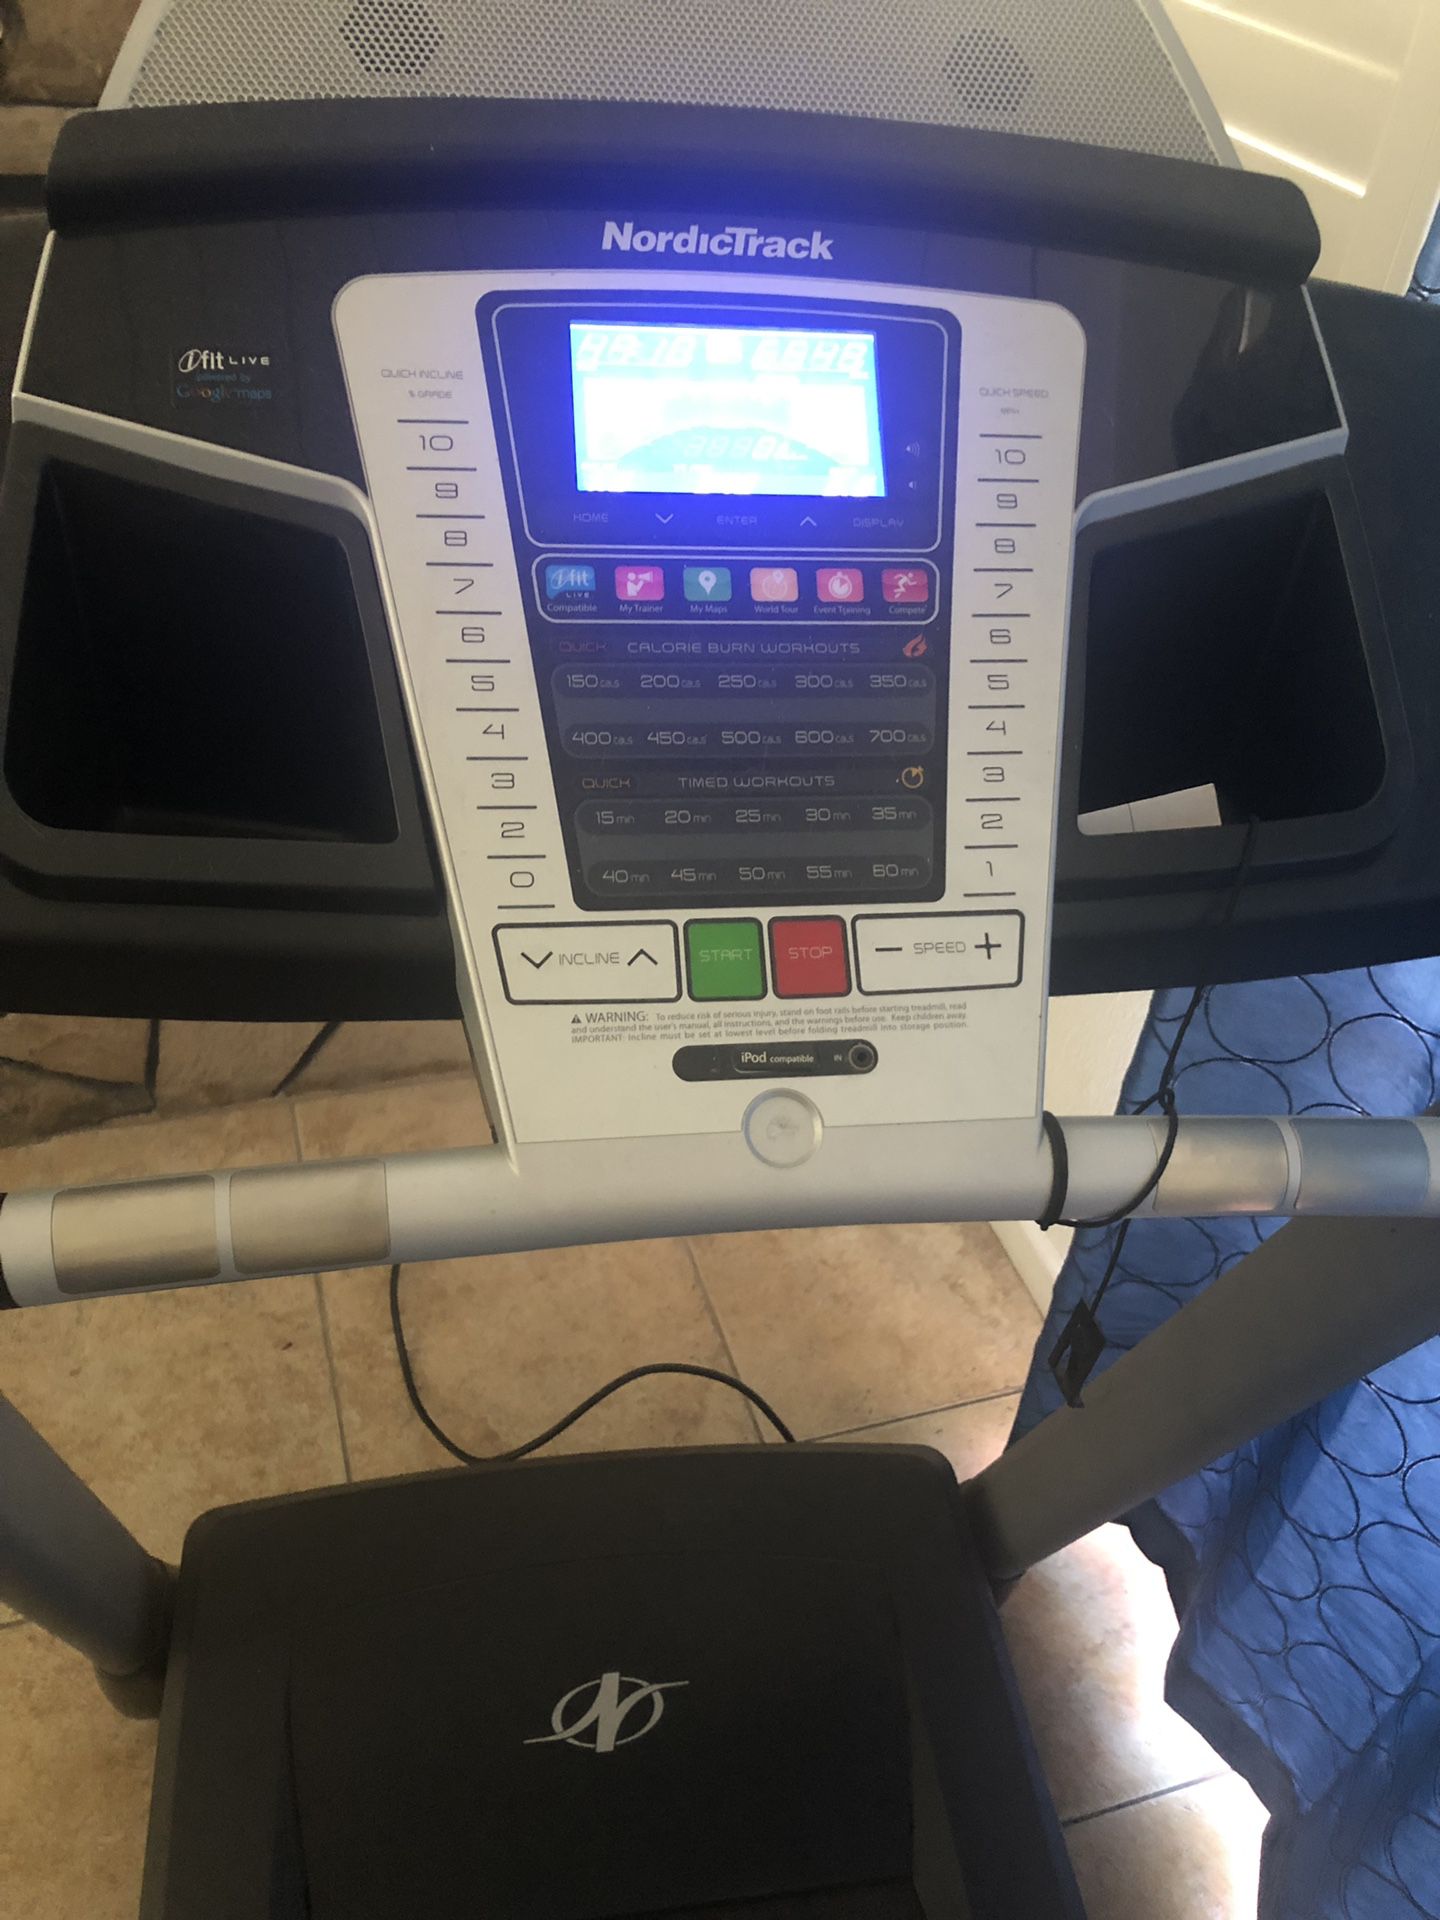 NordicTrack T5.5 Treadmill $300